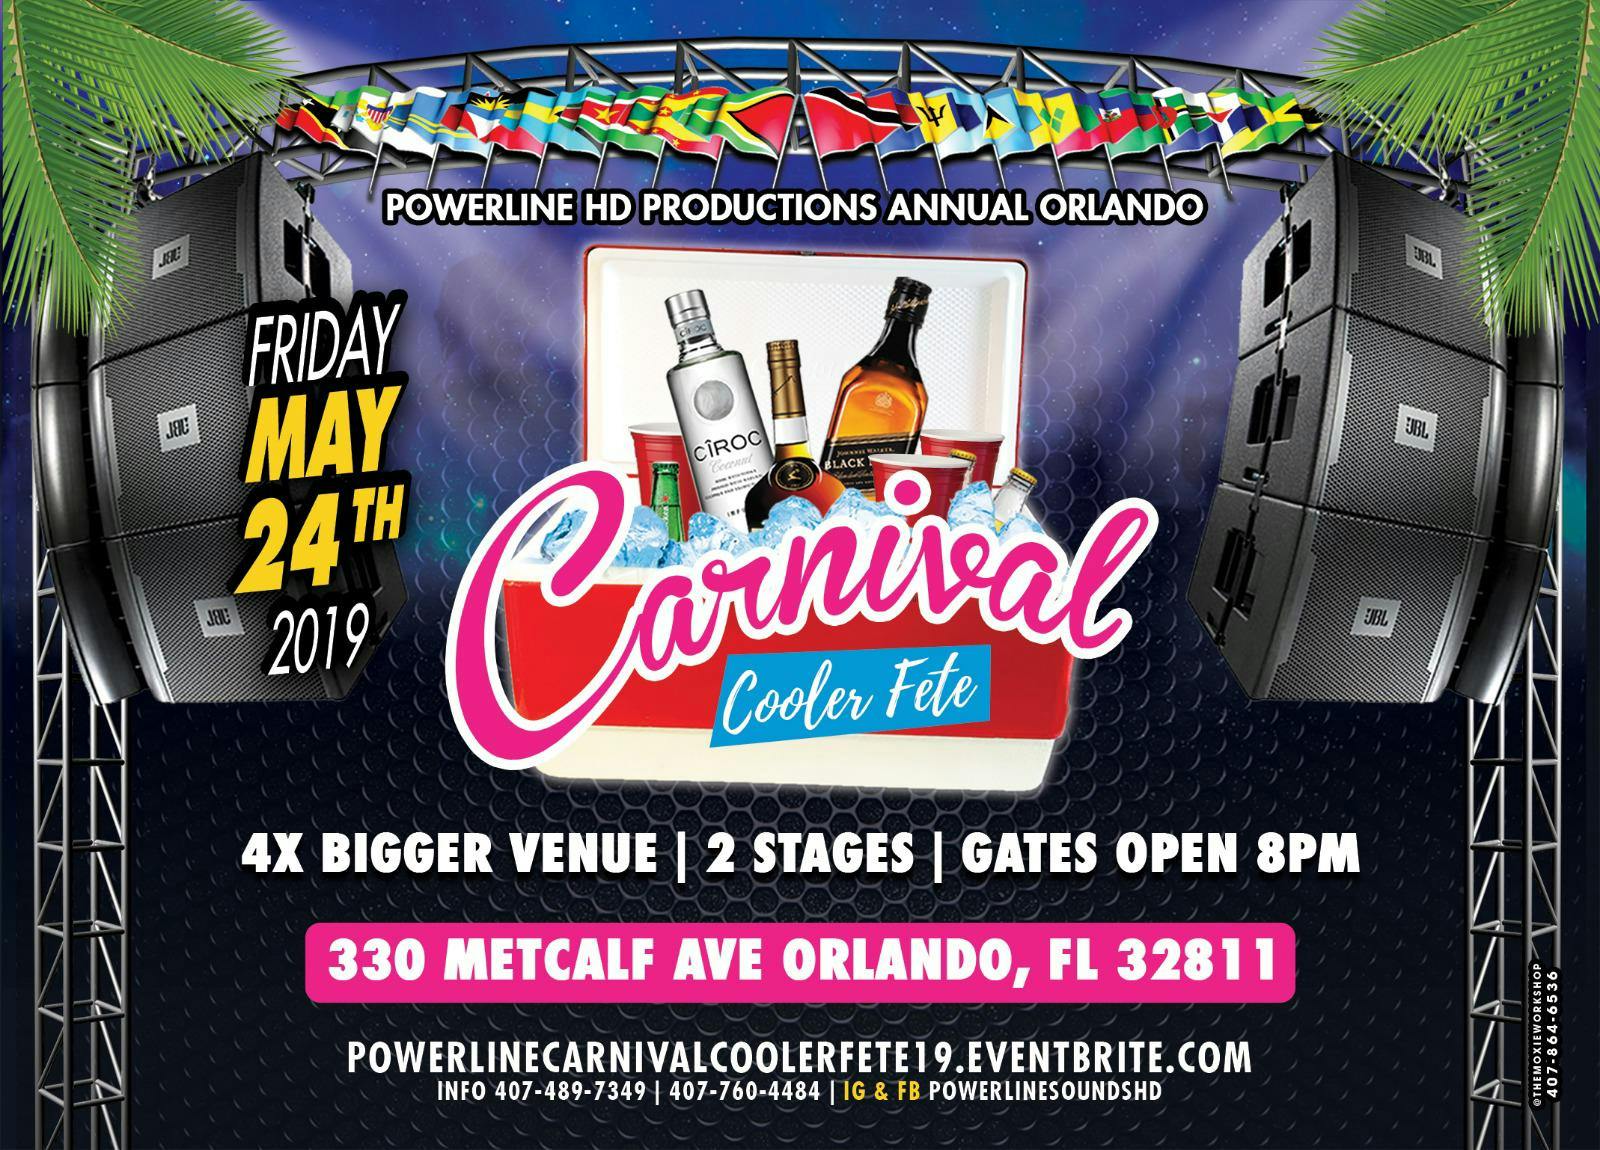 Powerline Carnival Cooler Fete